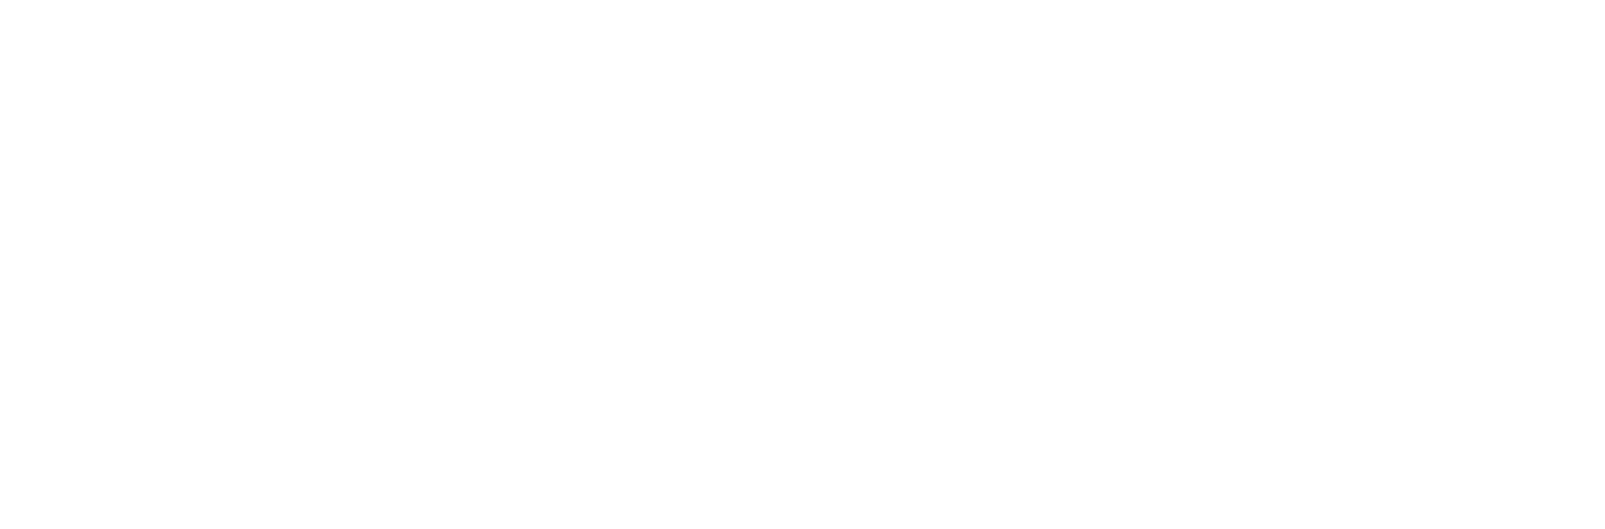 Cyxtera Technologies logo for dark backgrounds (transparent PNG)